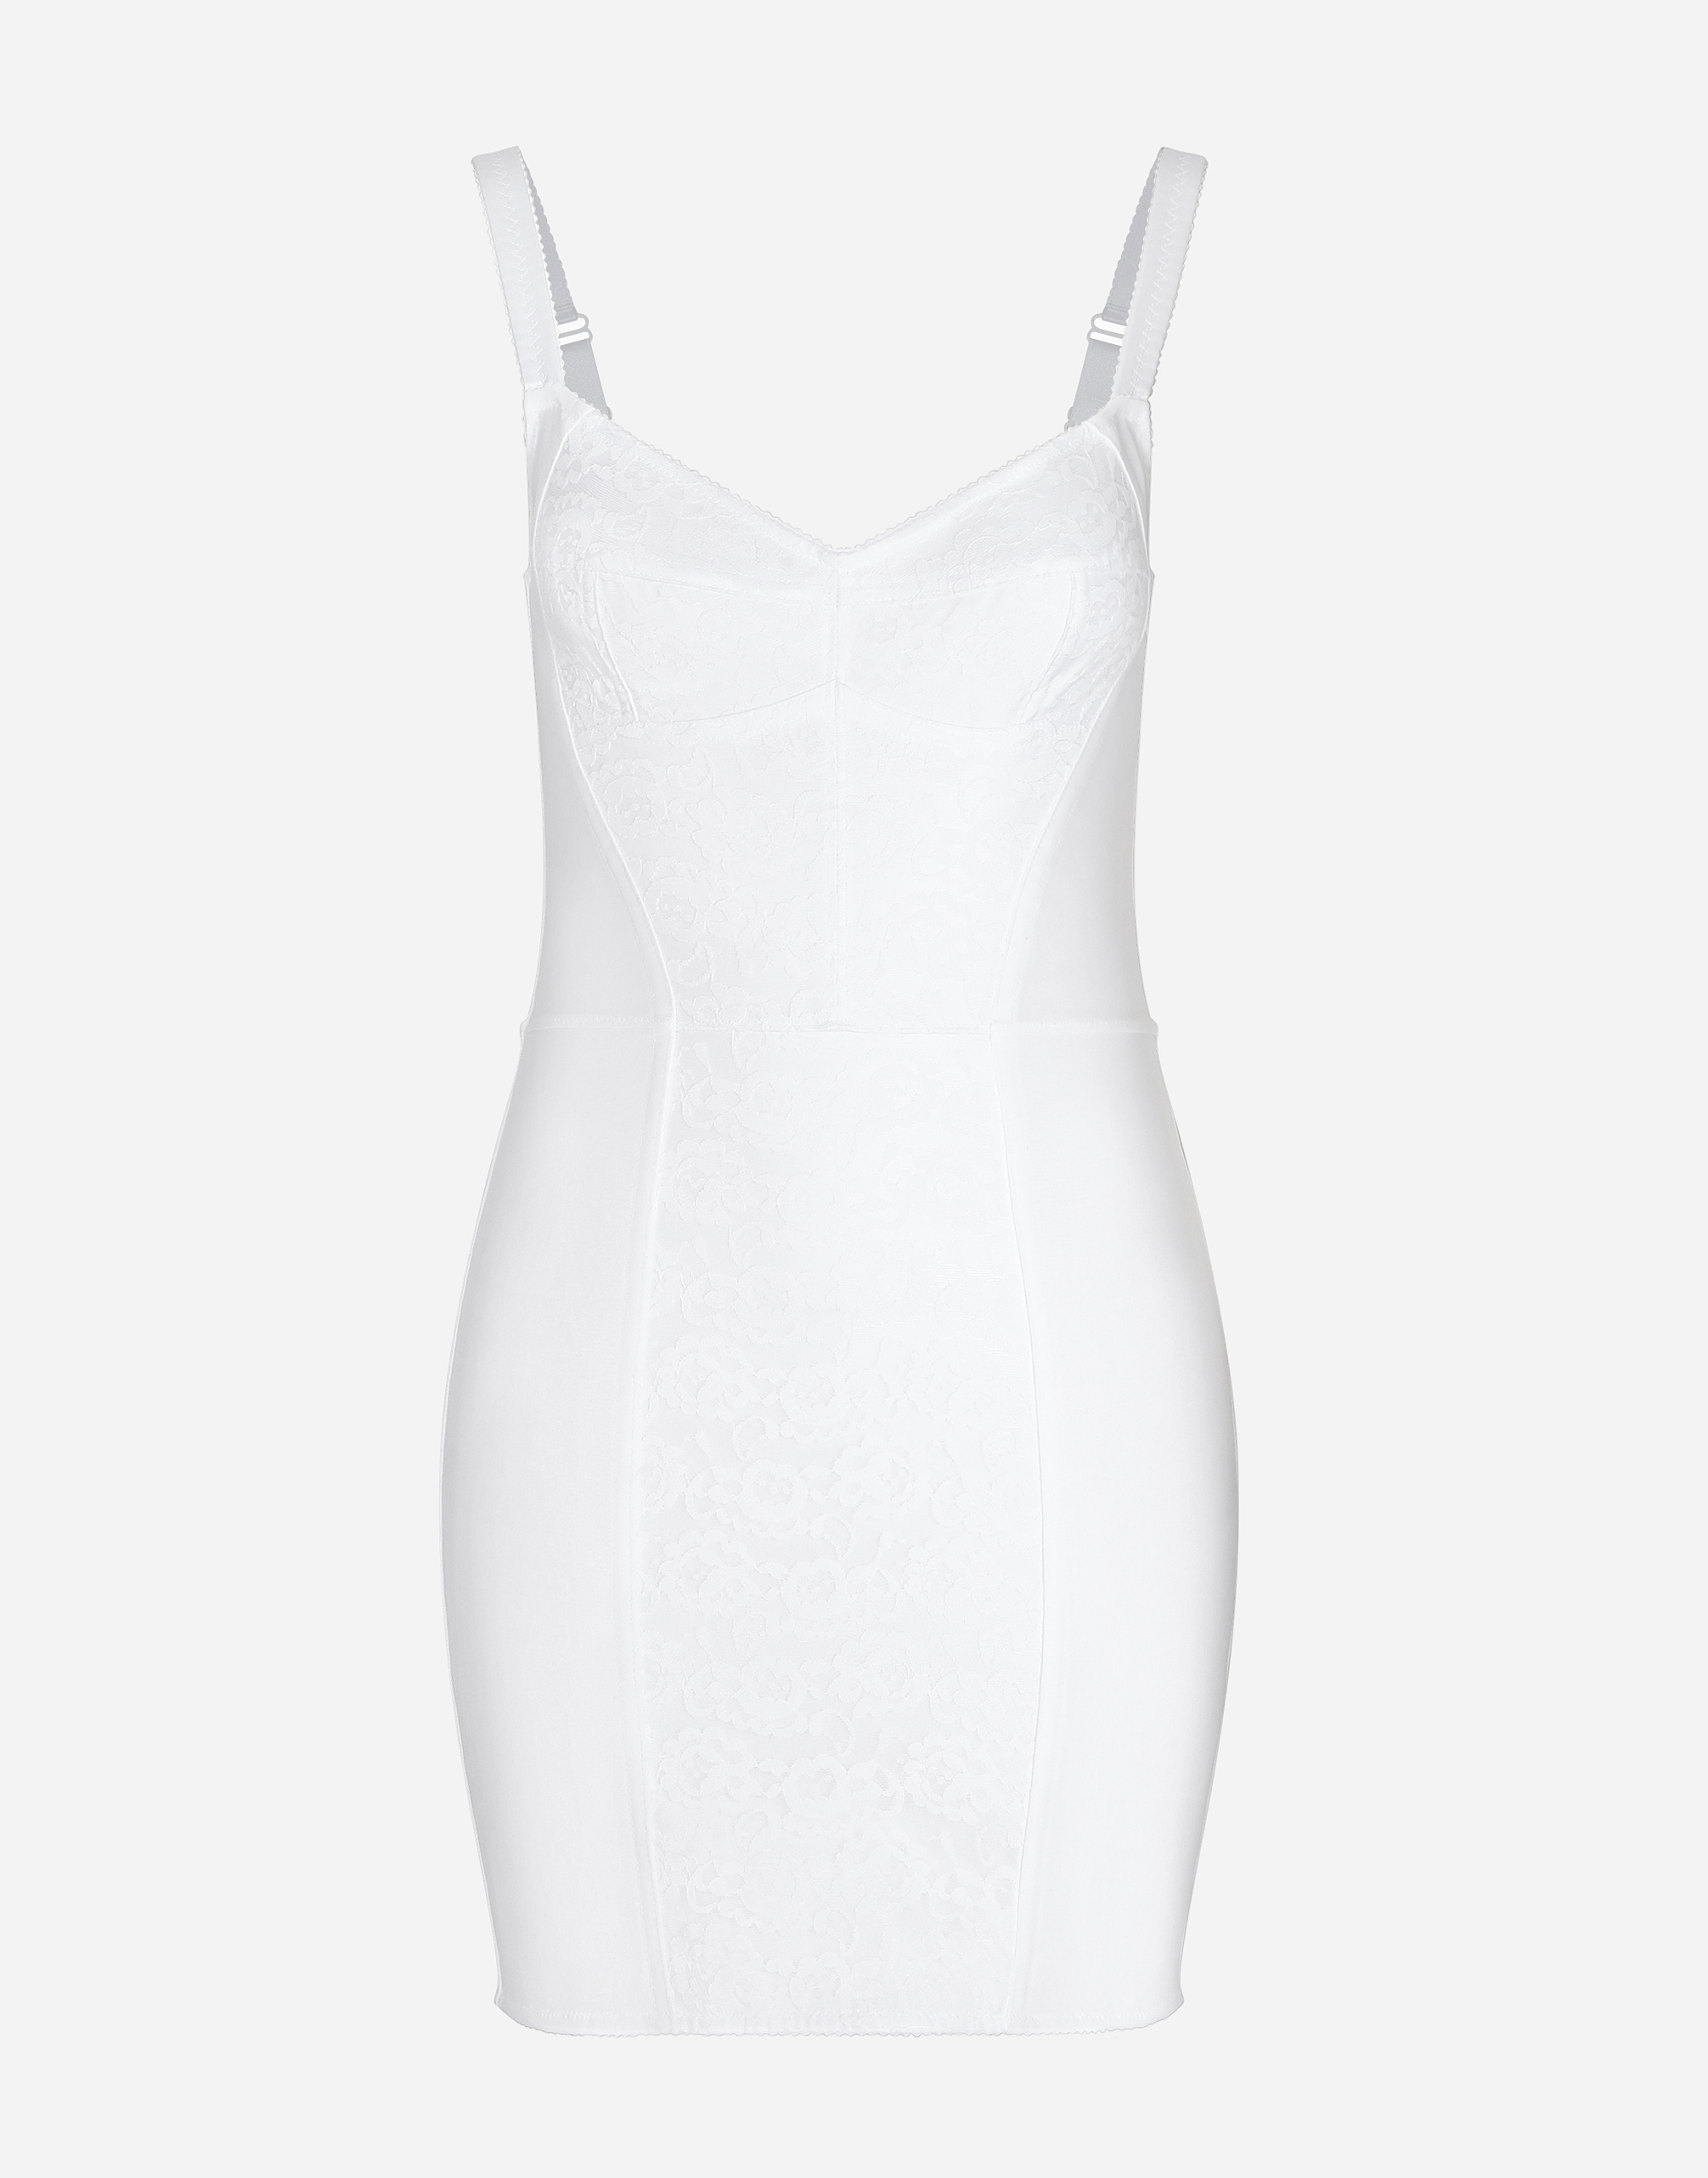 Corset-style slip dress in White